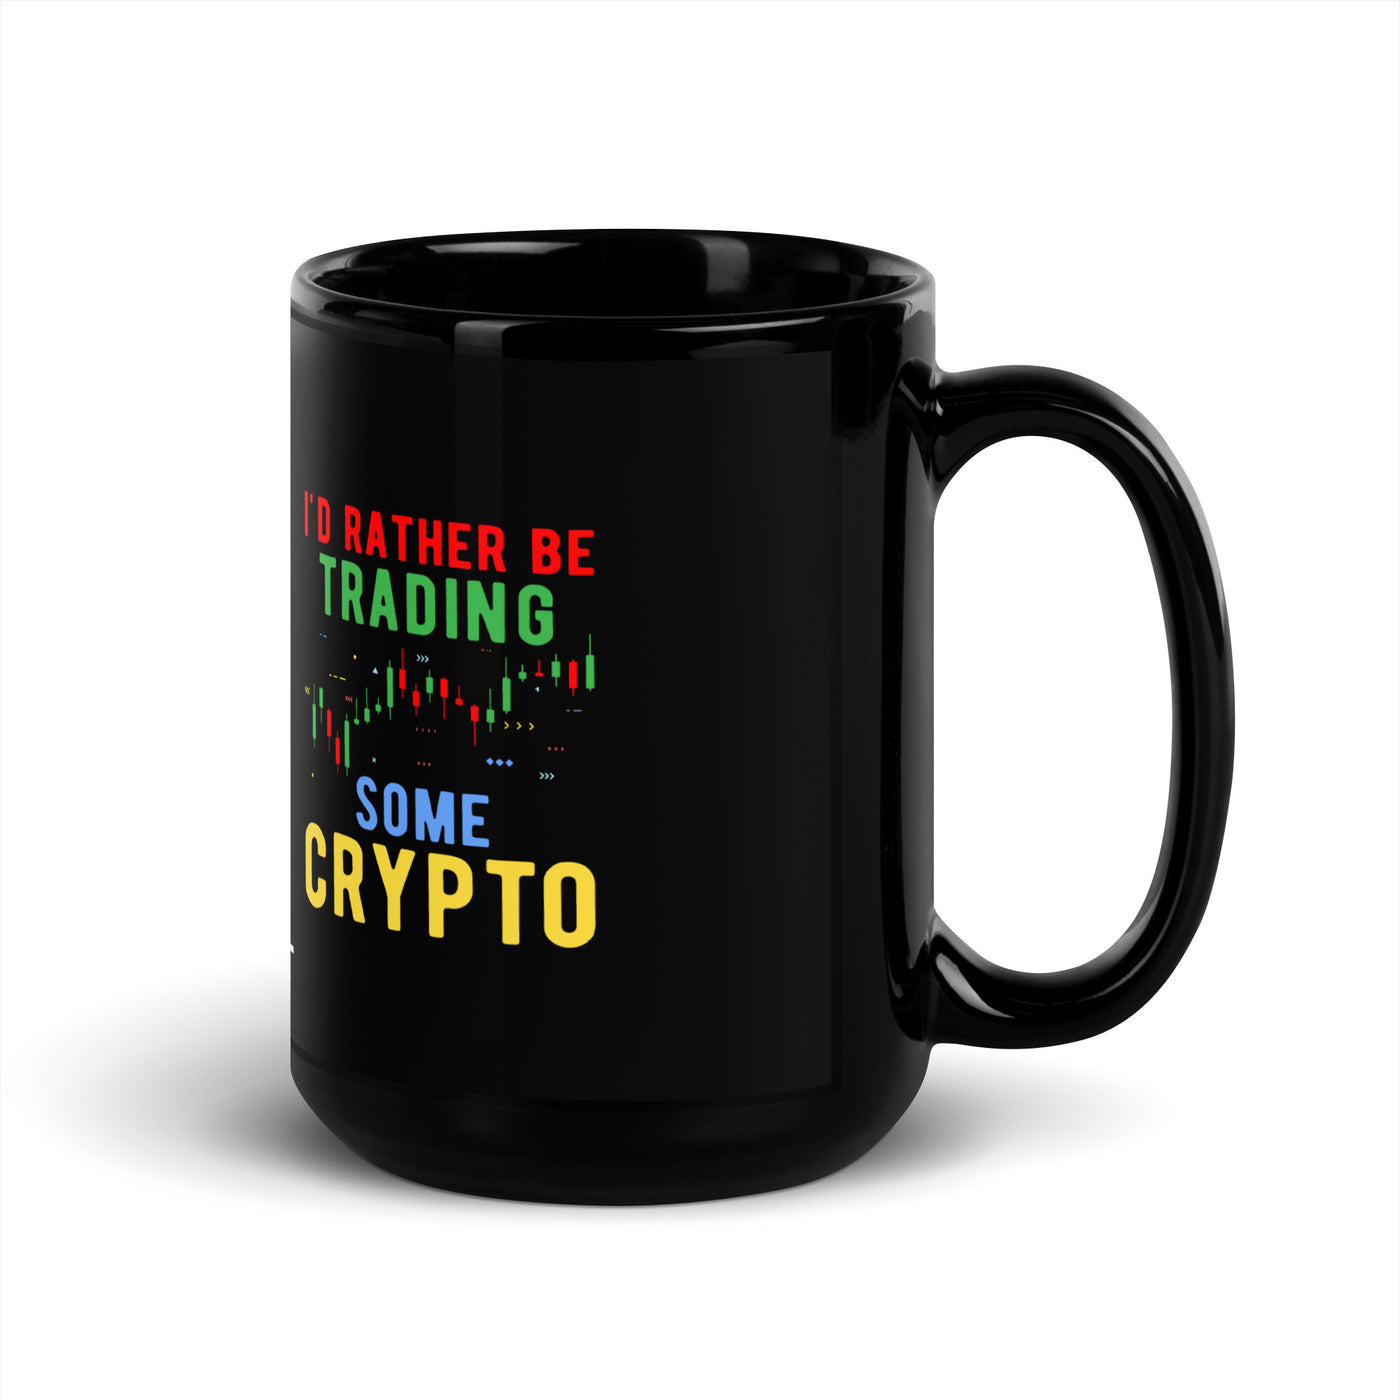 I'd rather be trading some Crypto - Black Glossy Mug